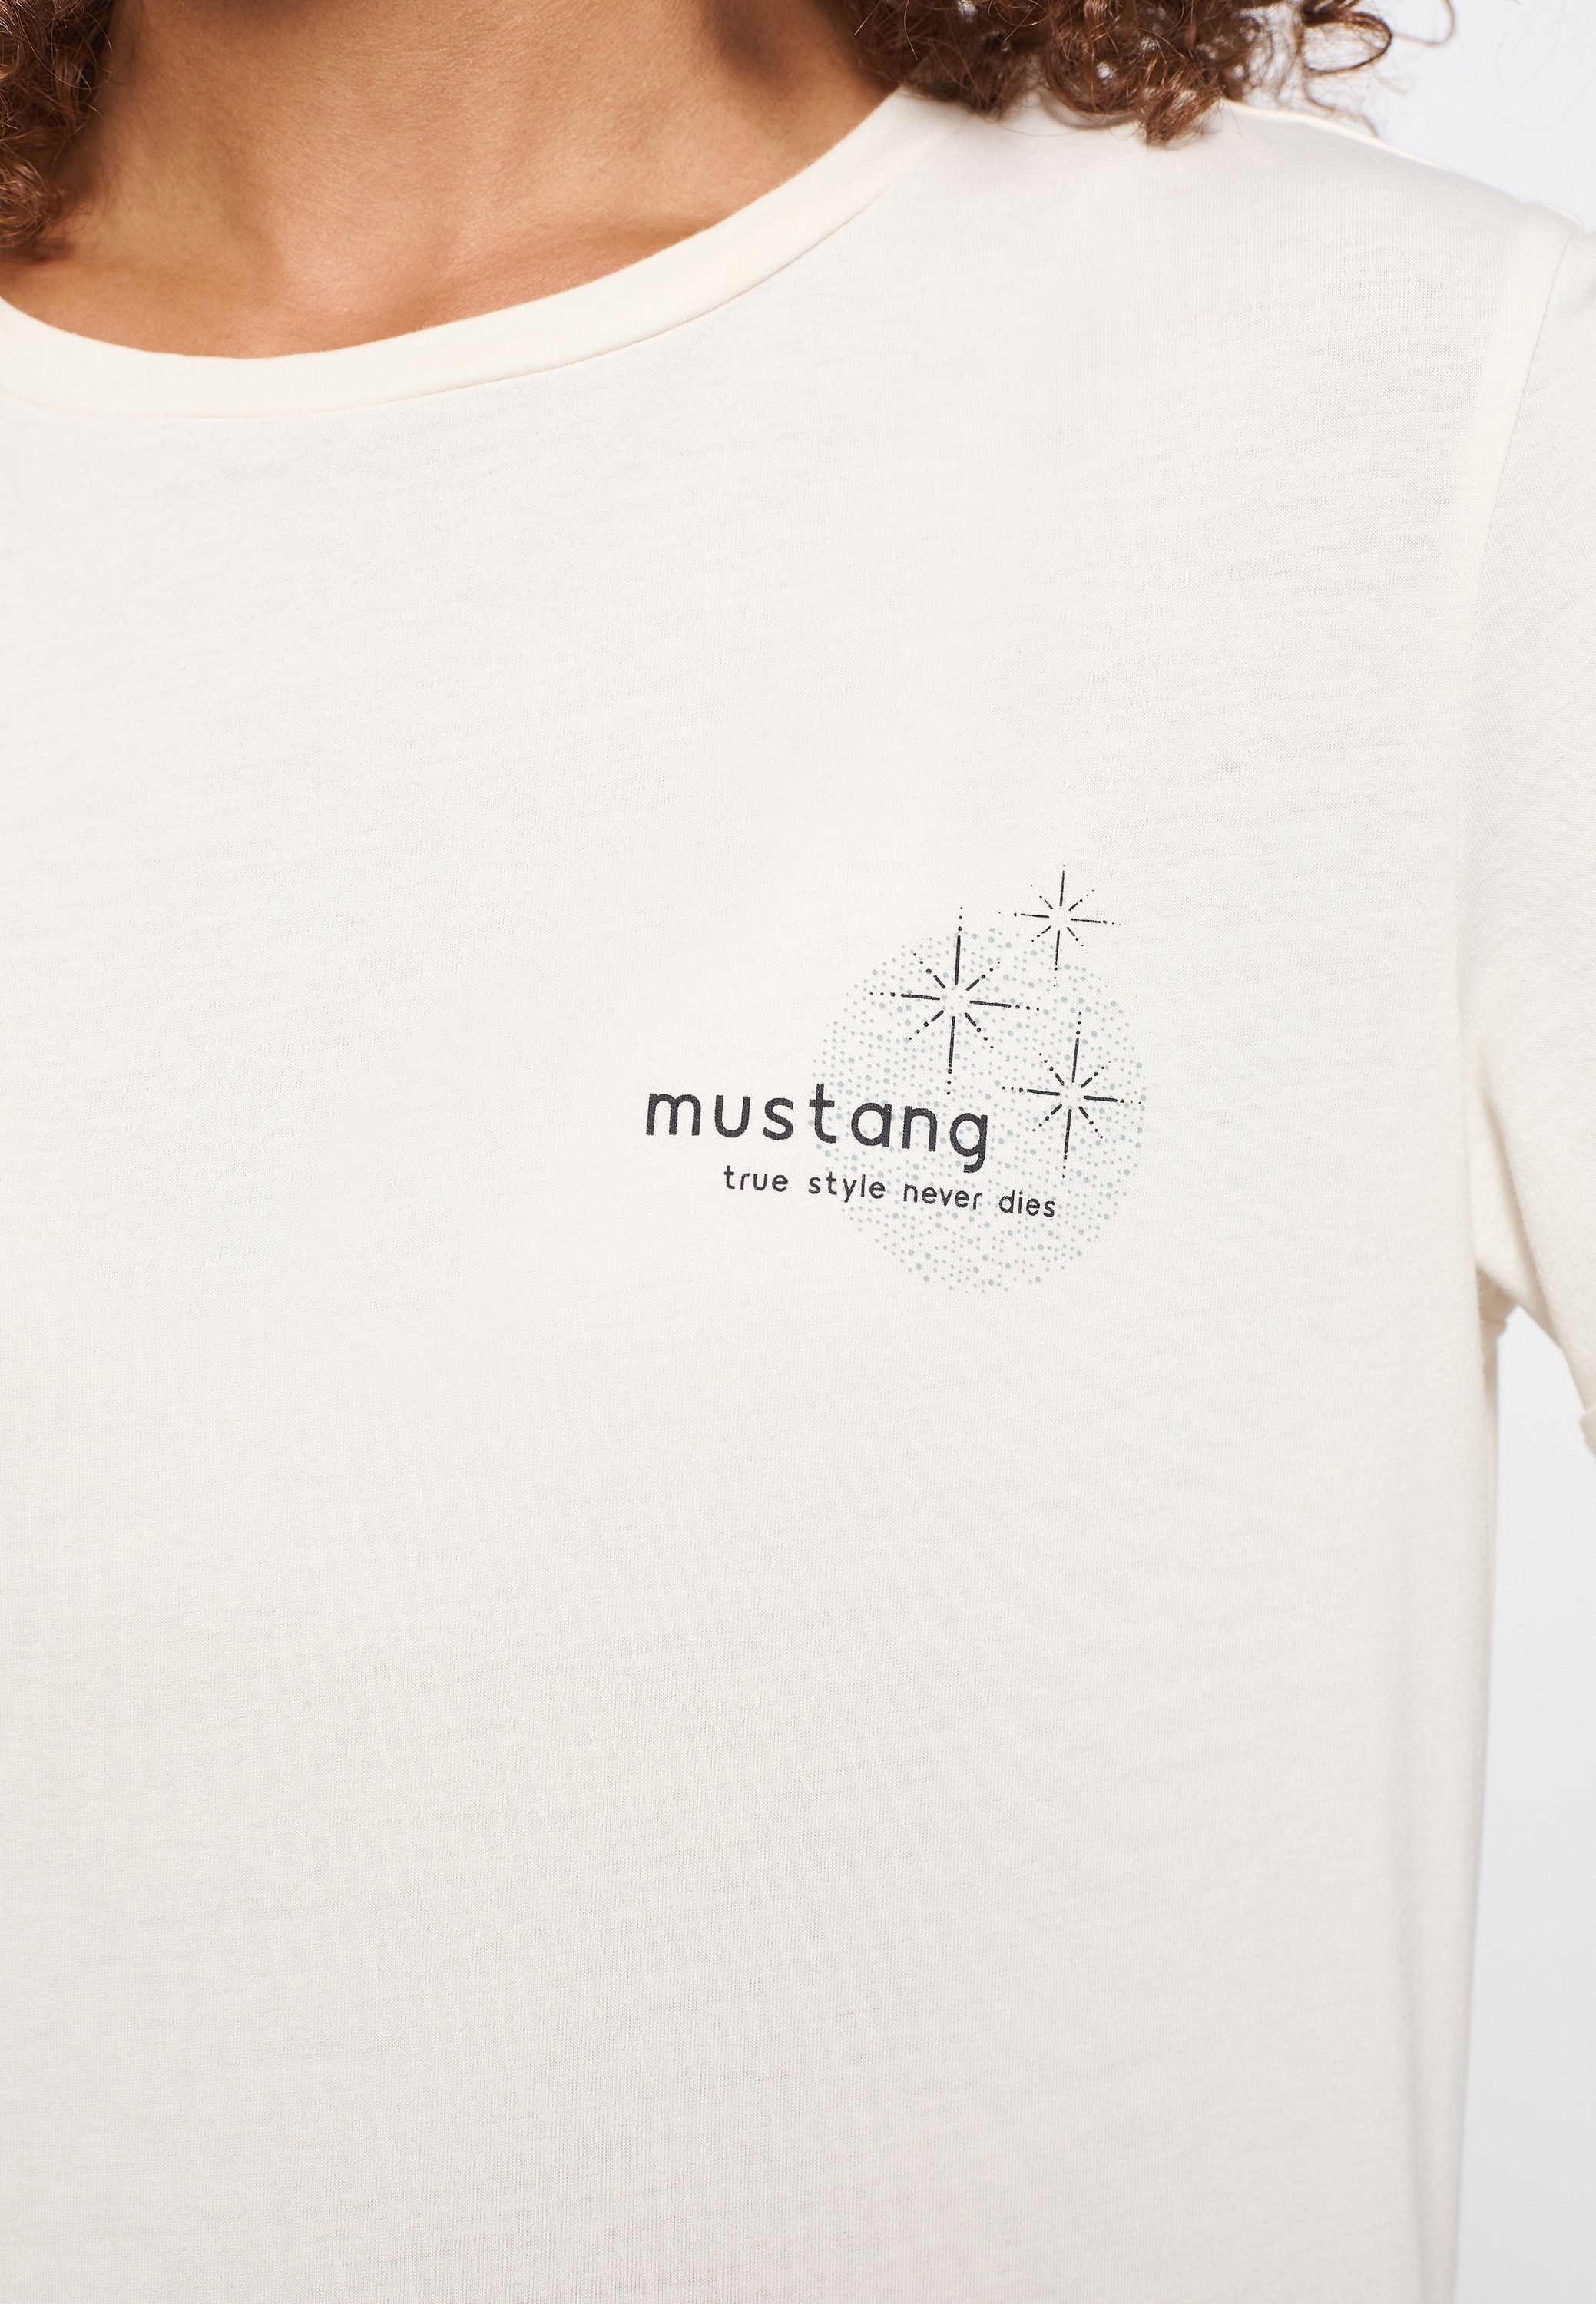 Mustang C Kurzarmshirt offwhite Alina Chestprint MUSTANG T-Shirt Style